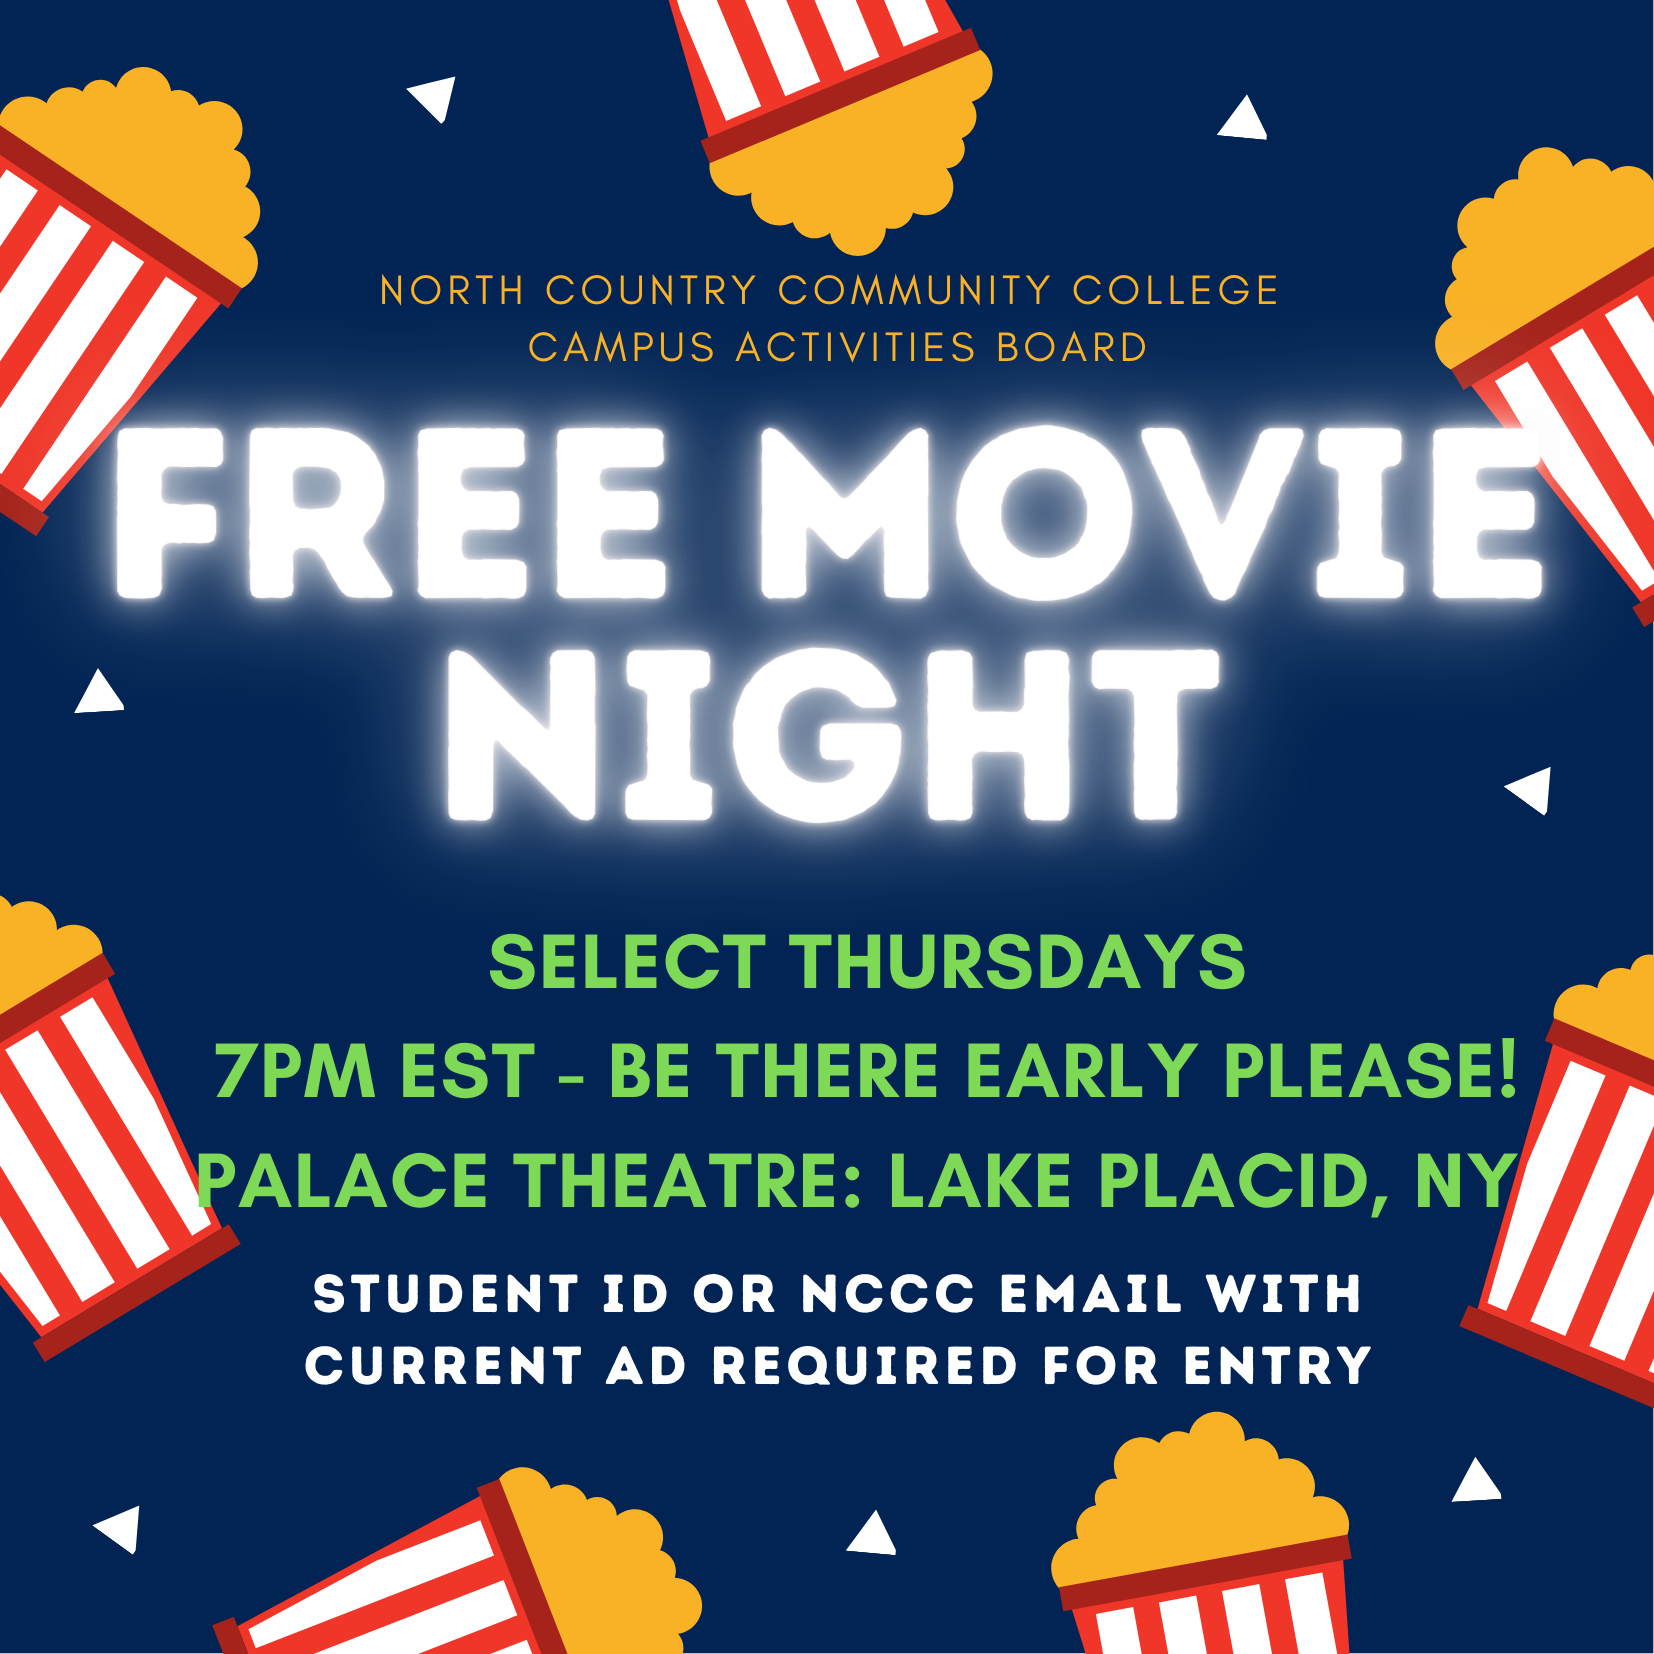 Lake Placid Free Movie Night for NCCC